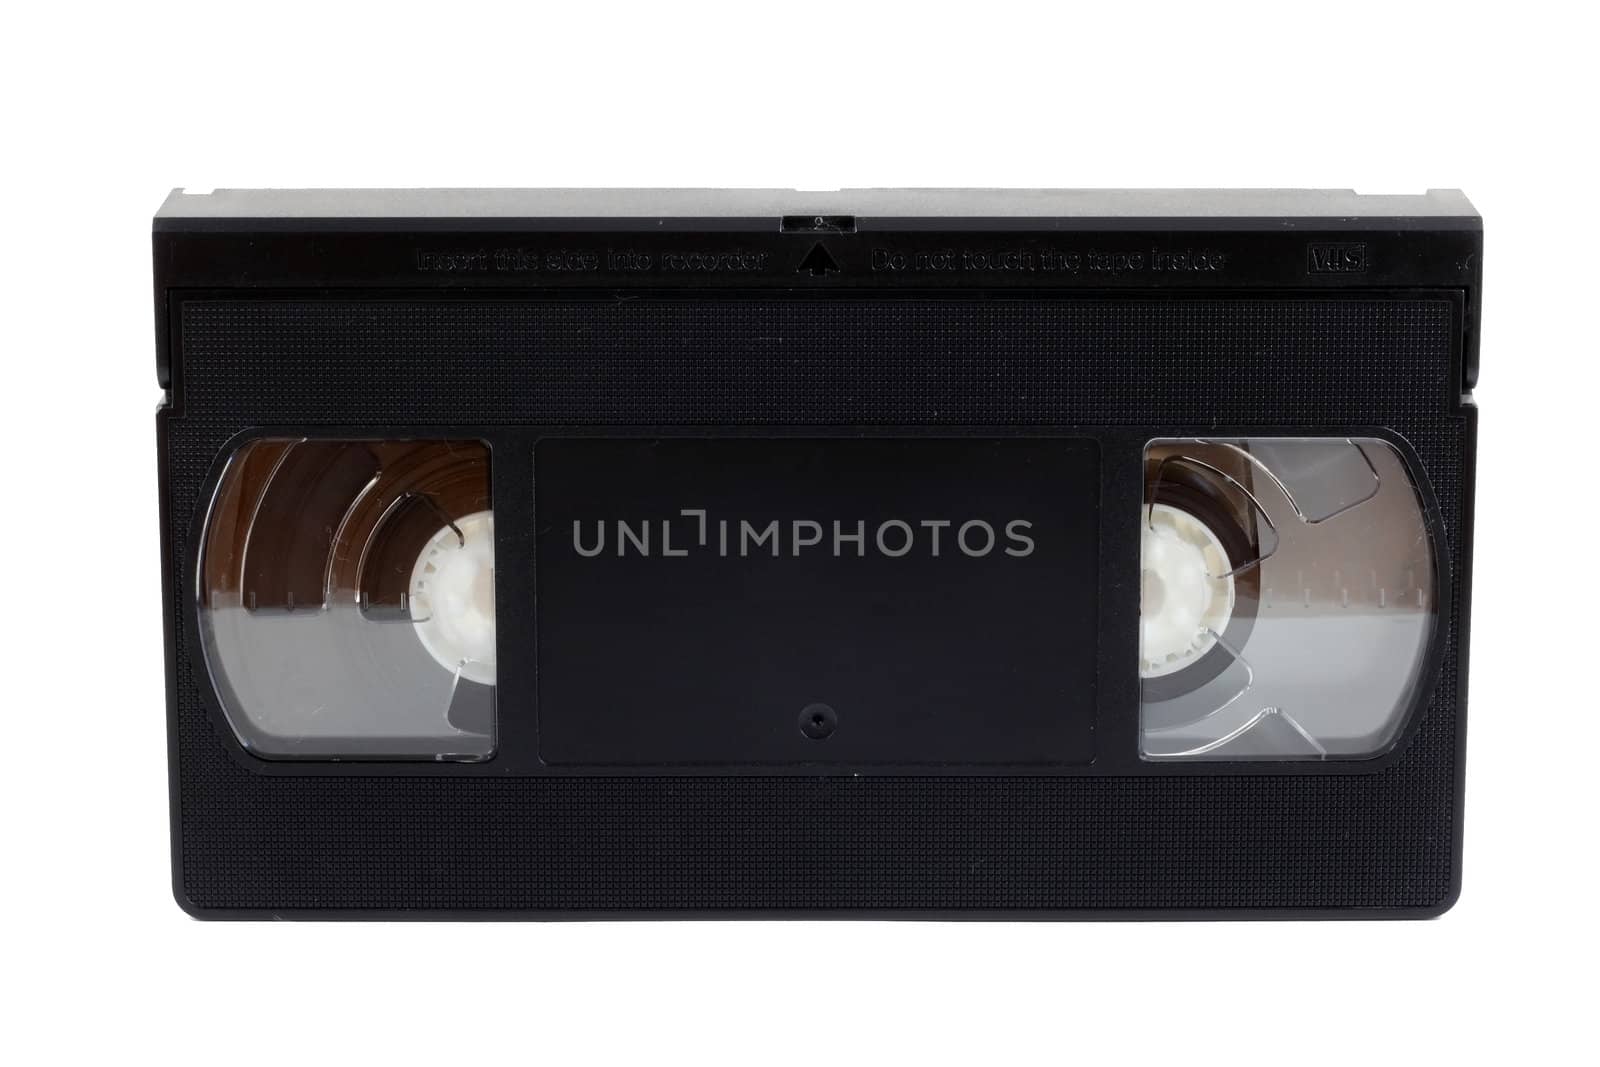 VHS cassette by yucelunal